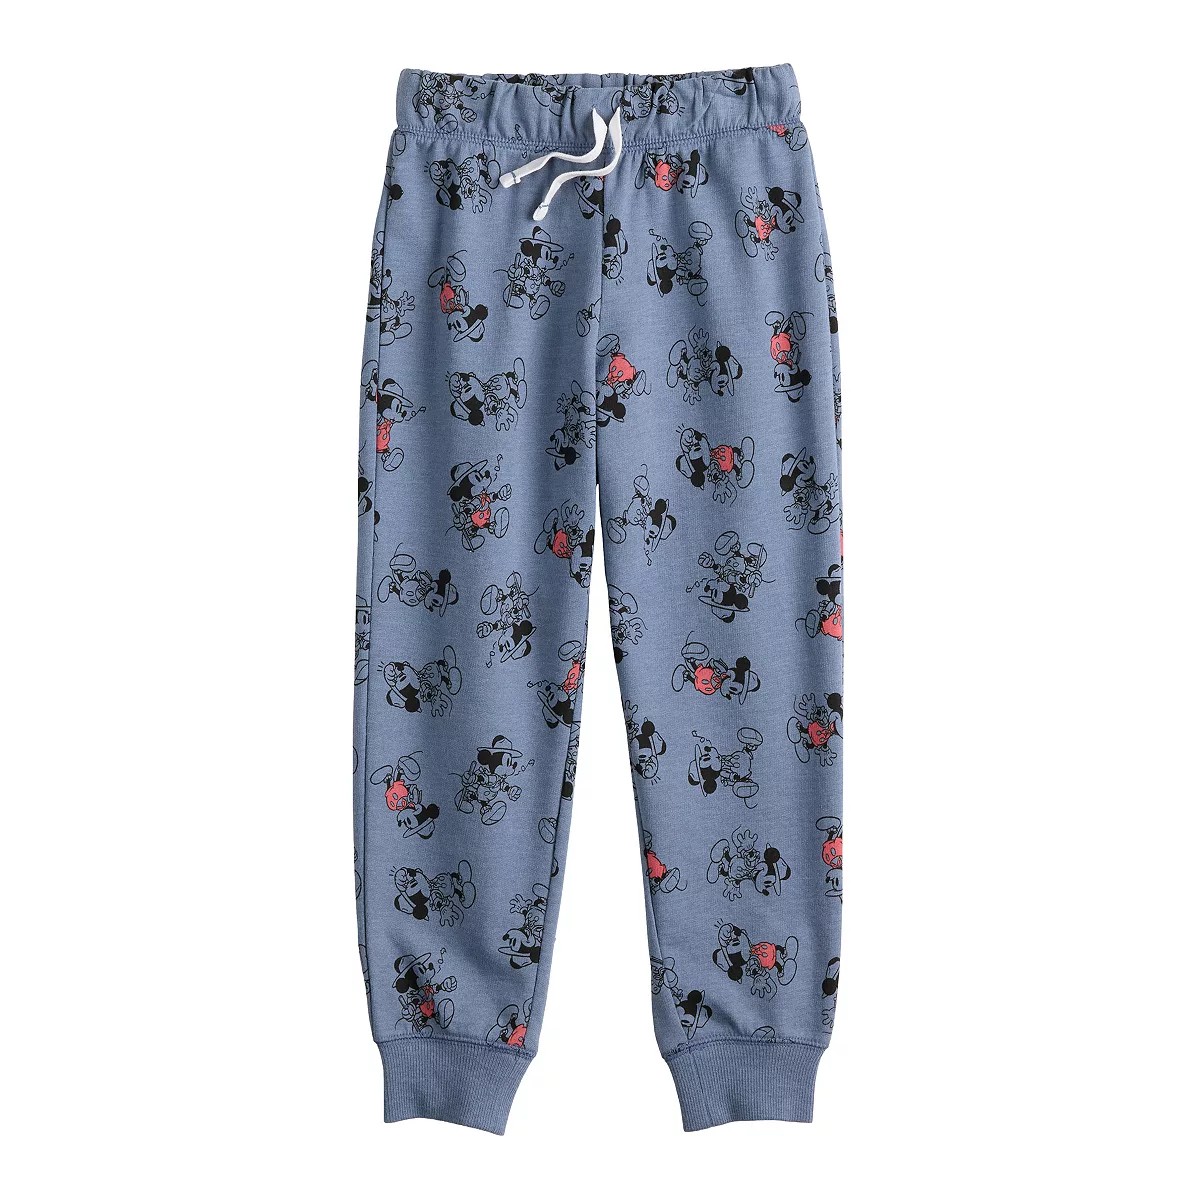 Men's Spider-man Knit Fictitious Character Printed Pajama Pants